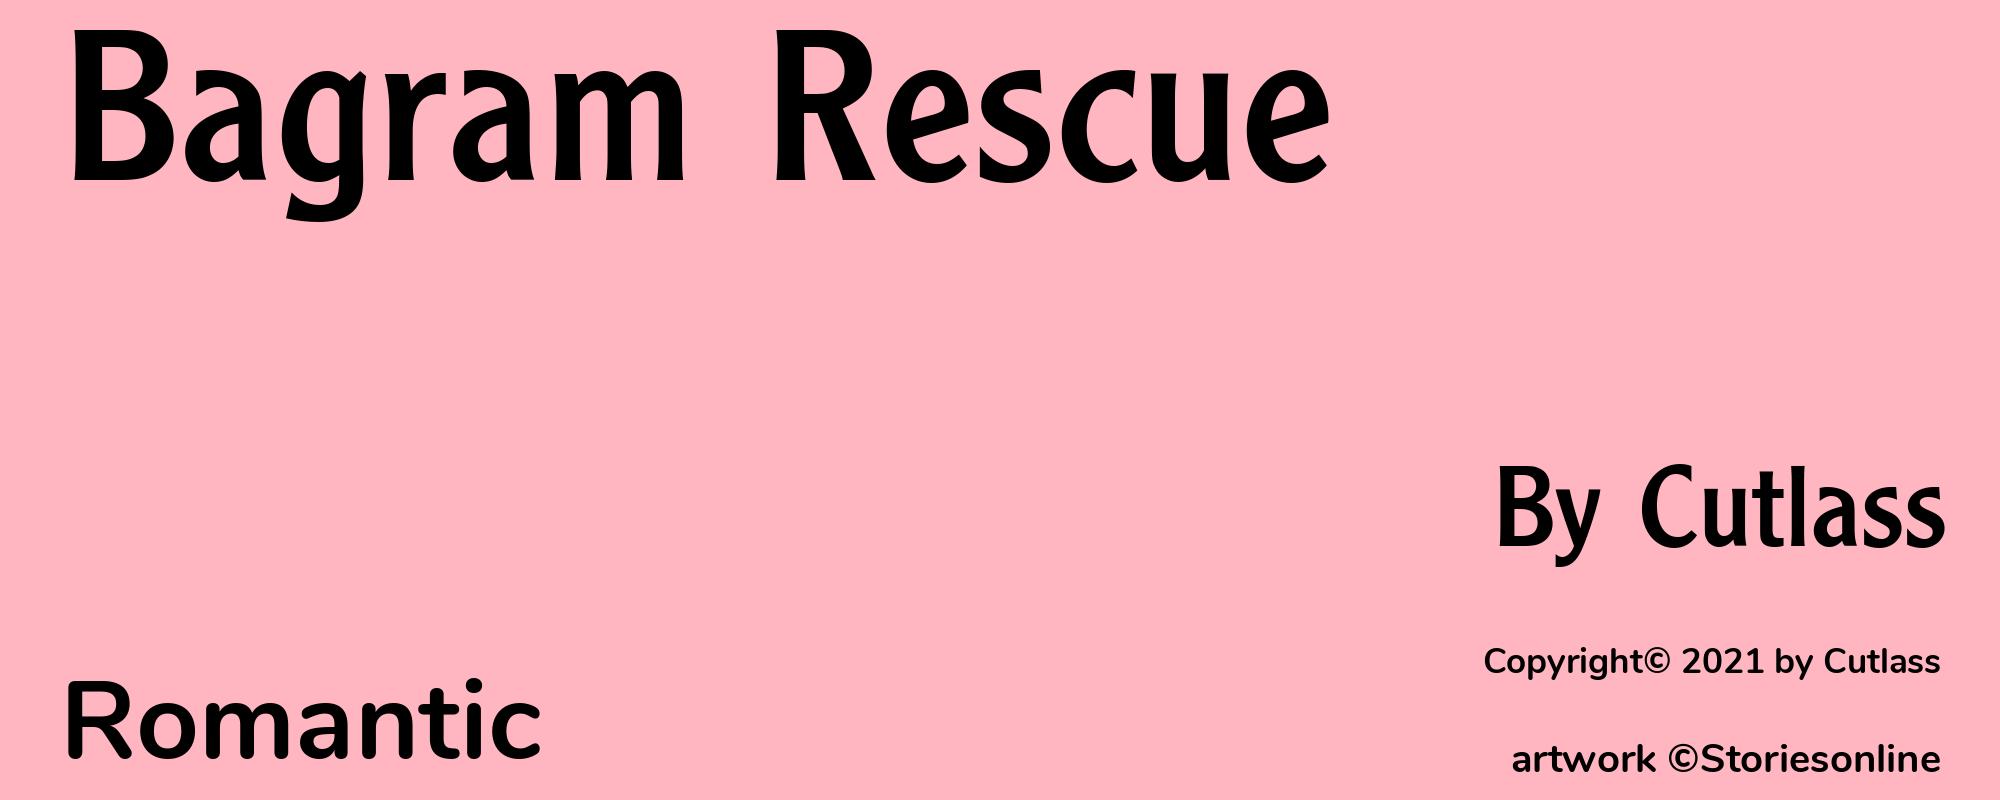 Bagram Rescue - Cover